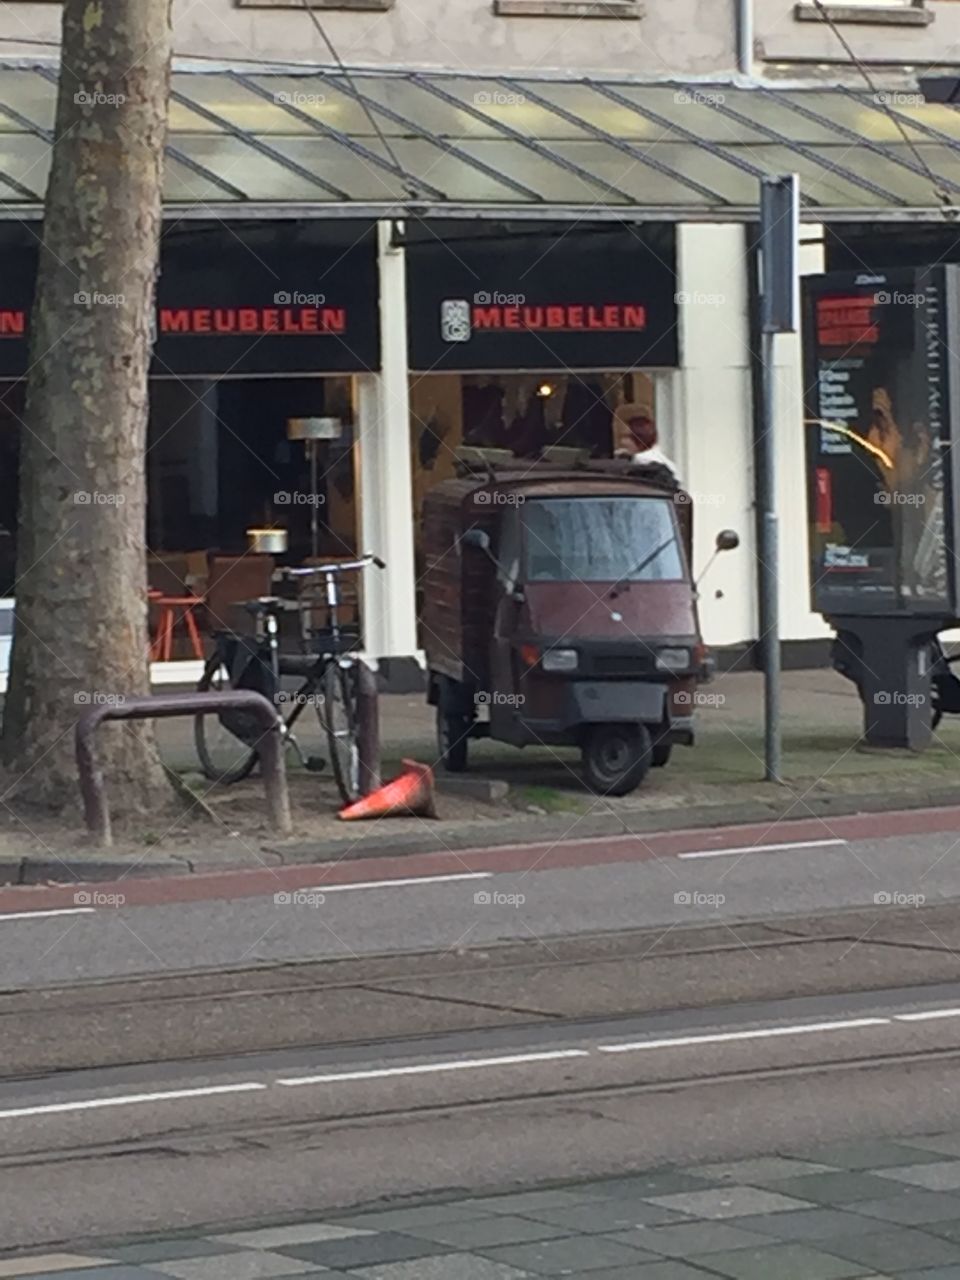 Ape car in Amsterdam 